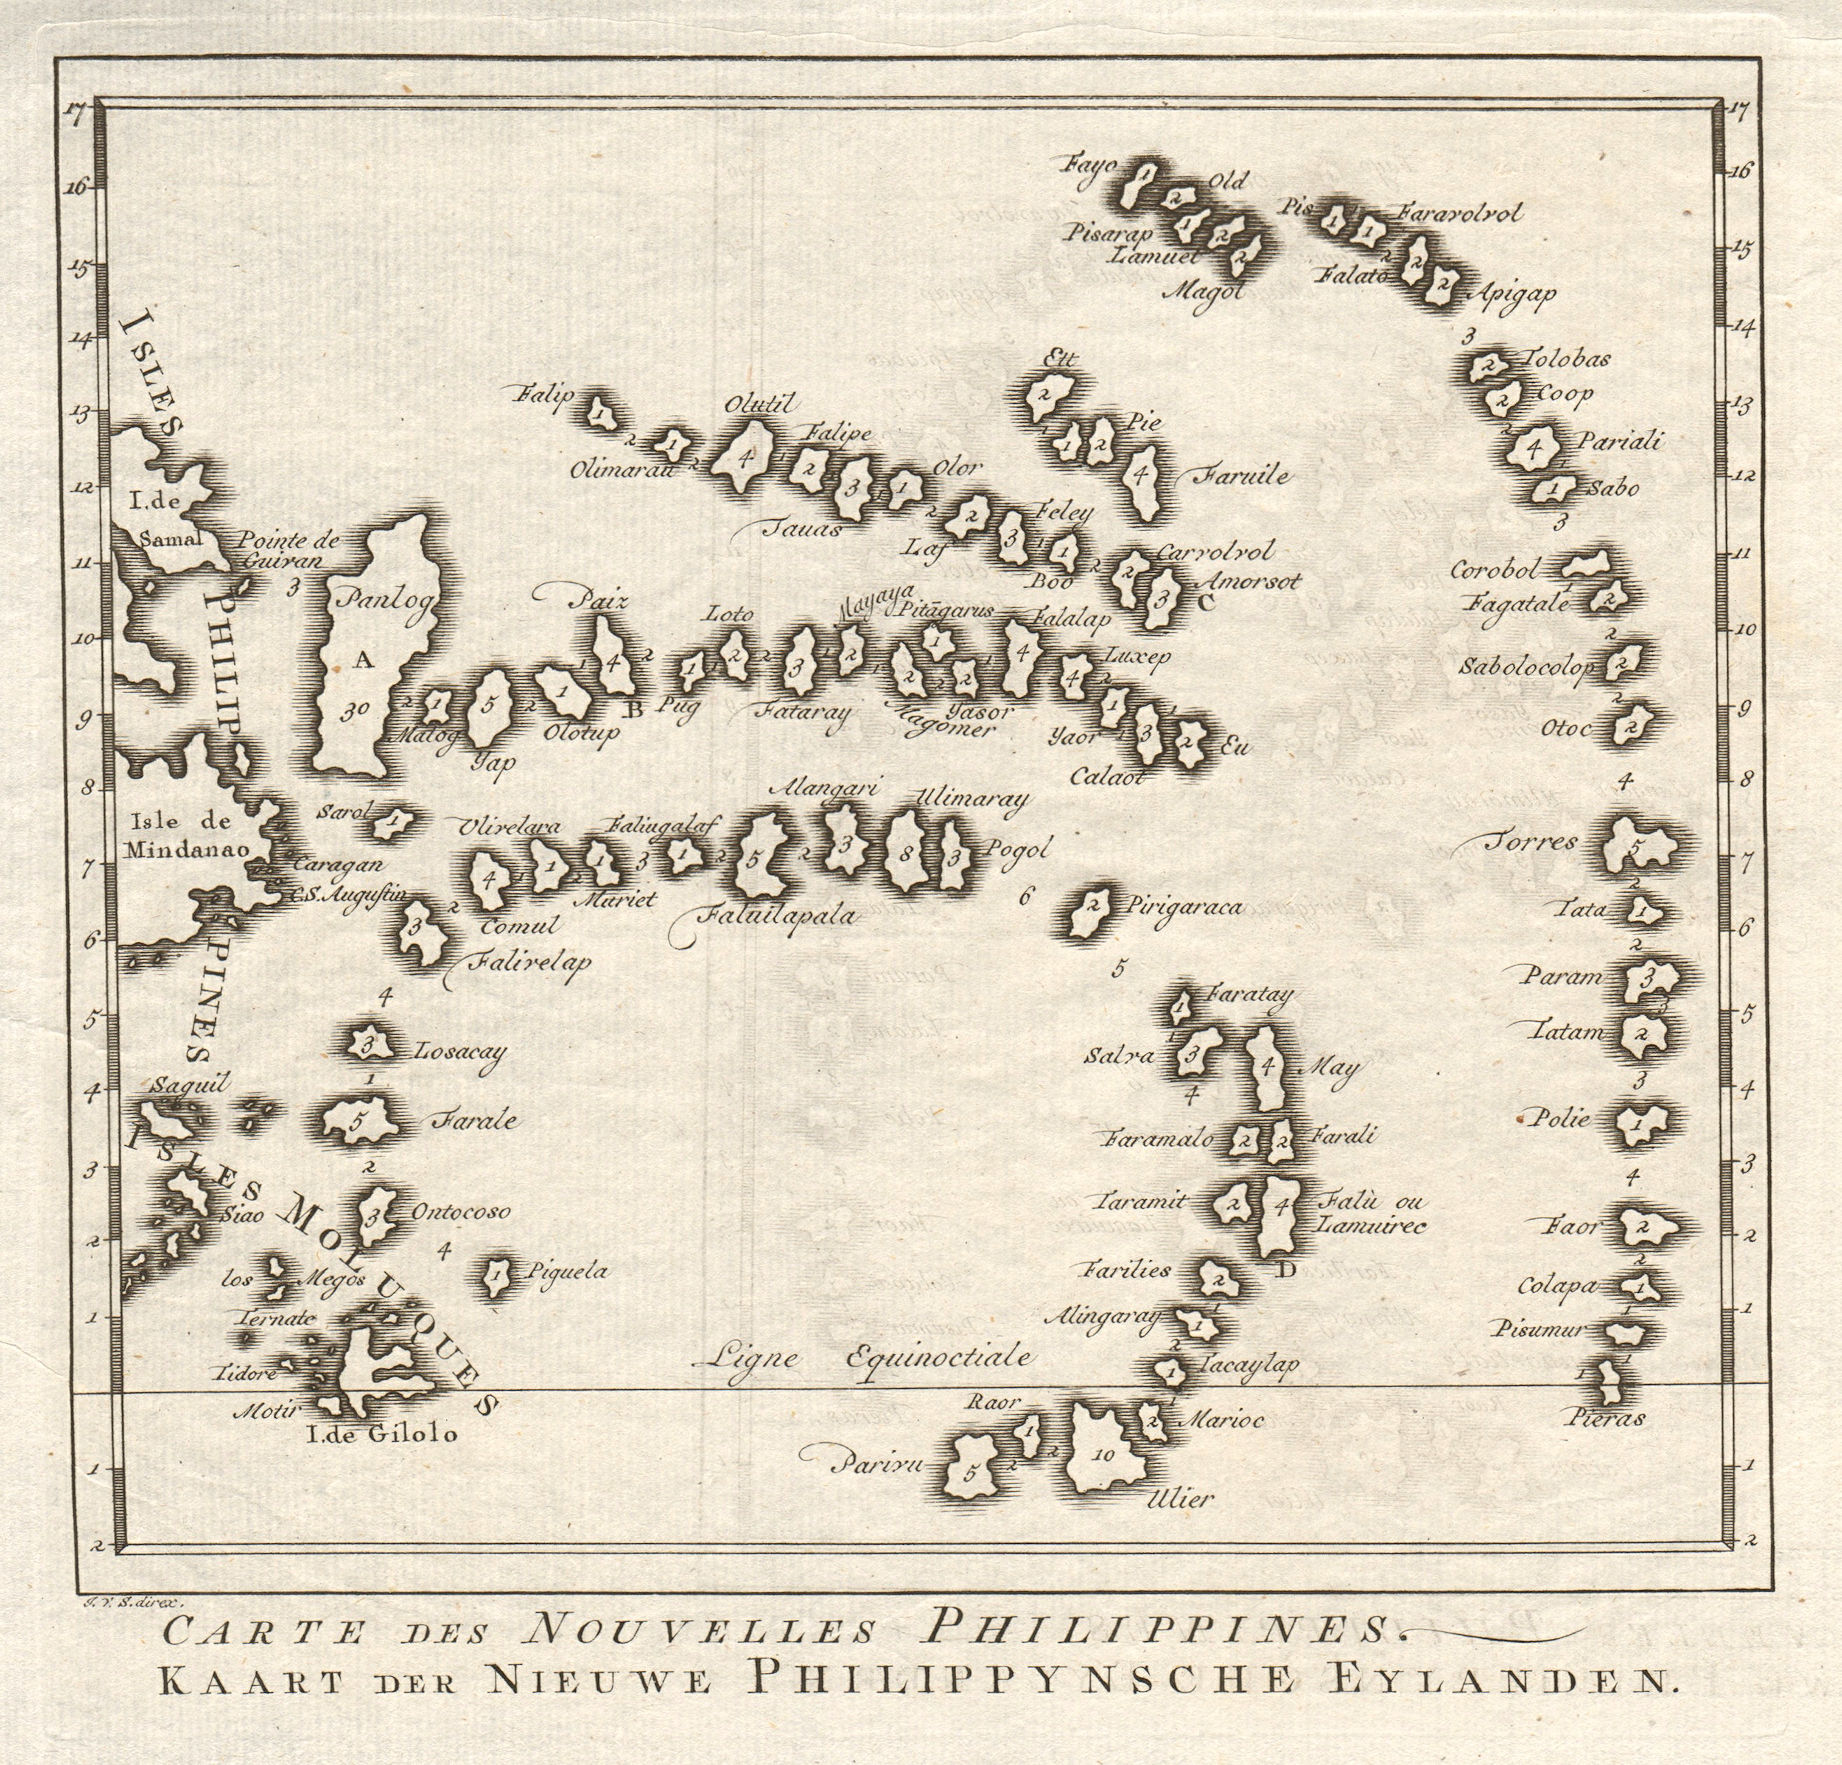 'Carte des Nouvelles Philippines'. Caroline islands. BELLIN/SCHLEY 1757 map